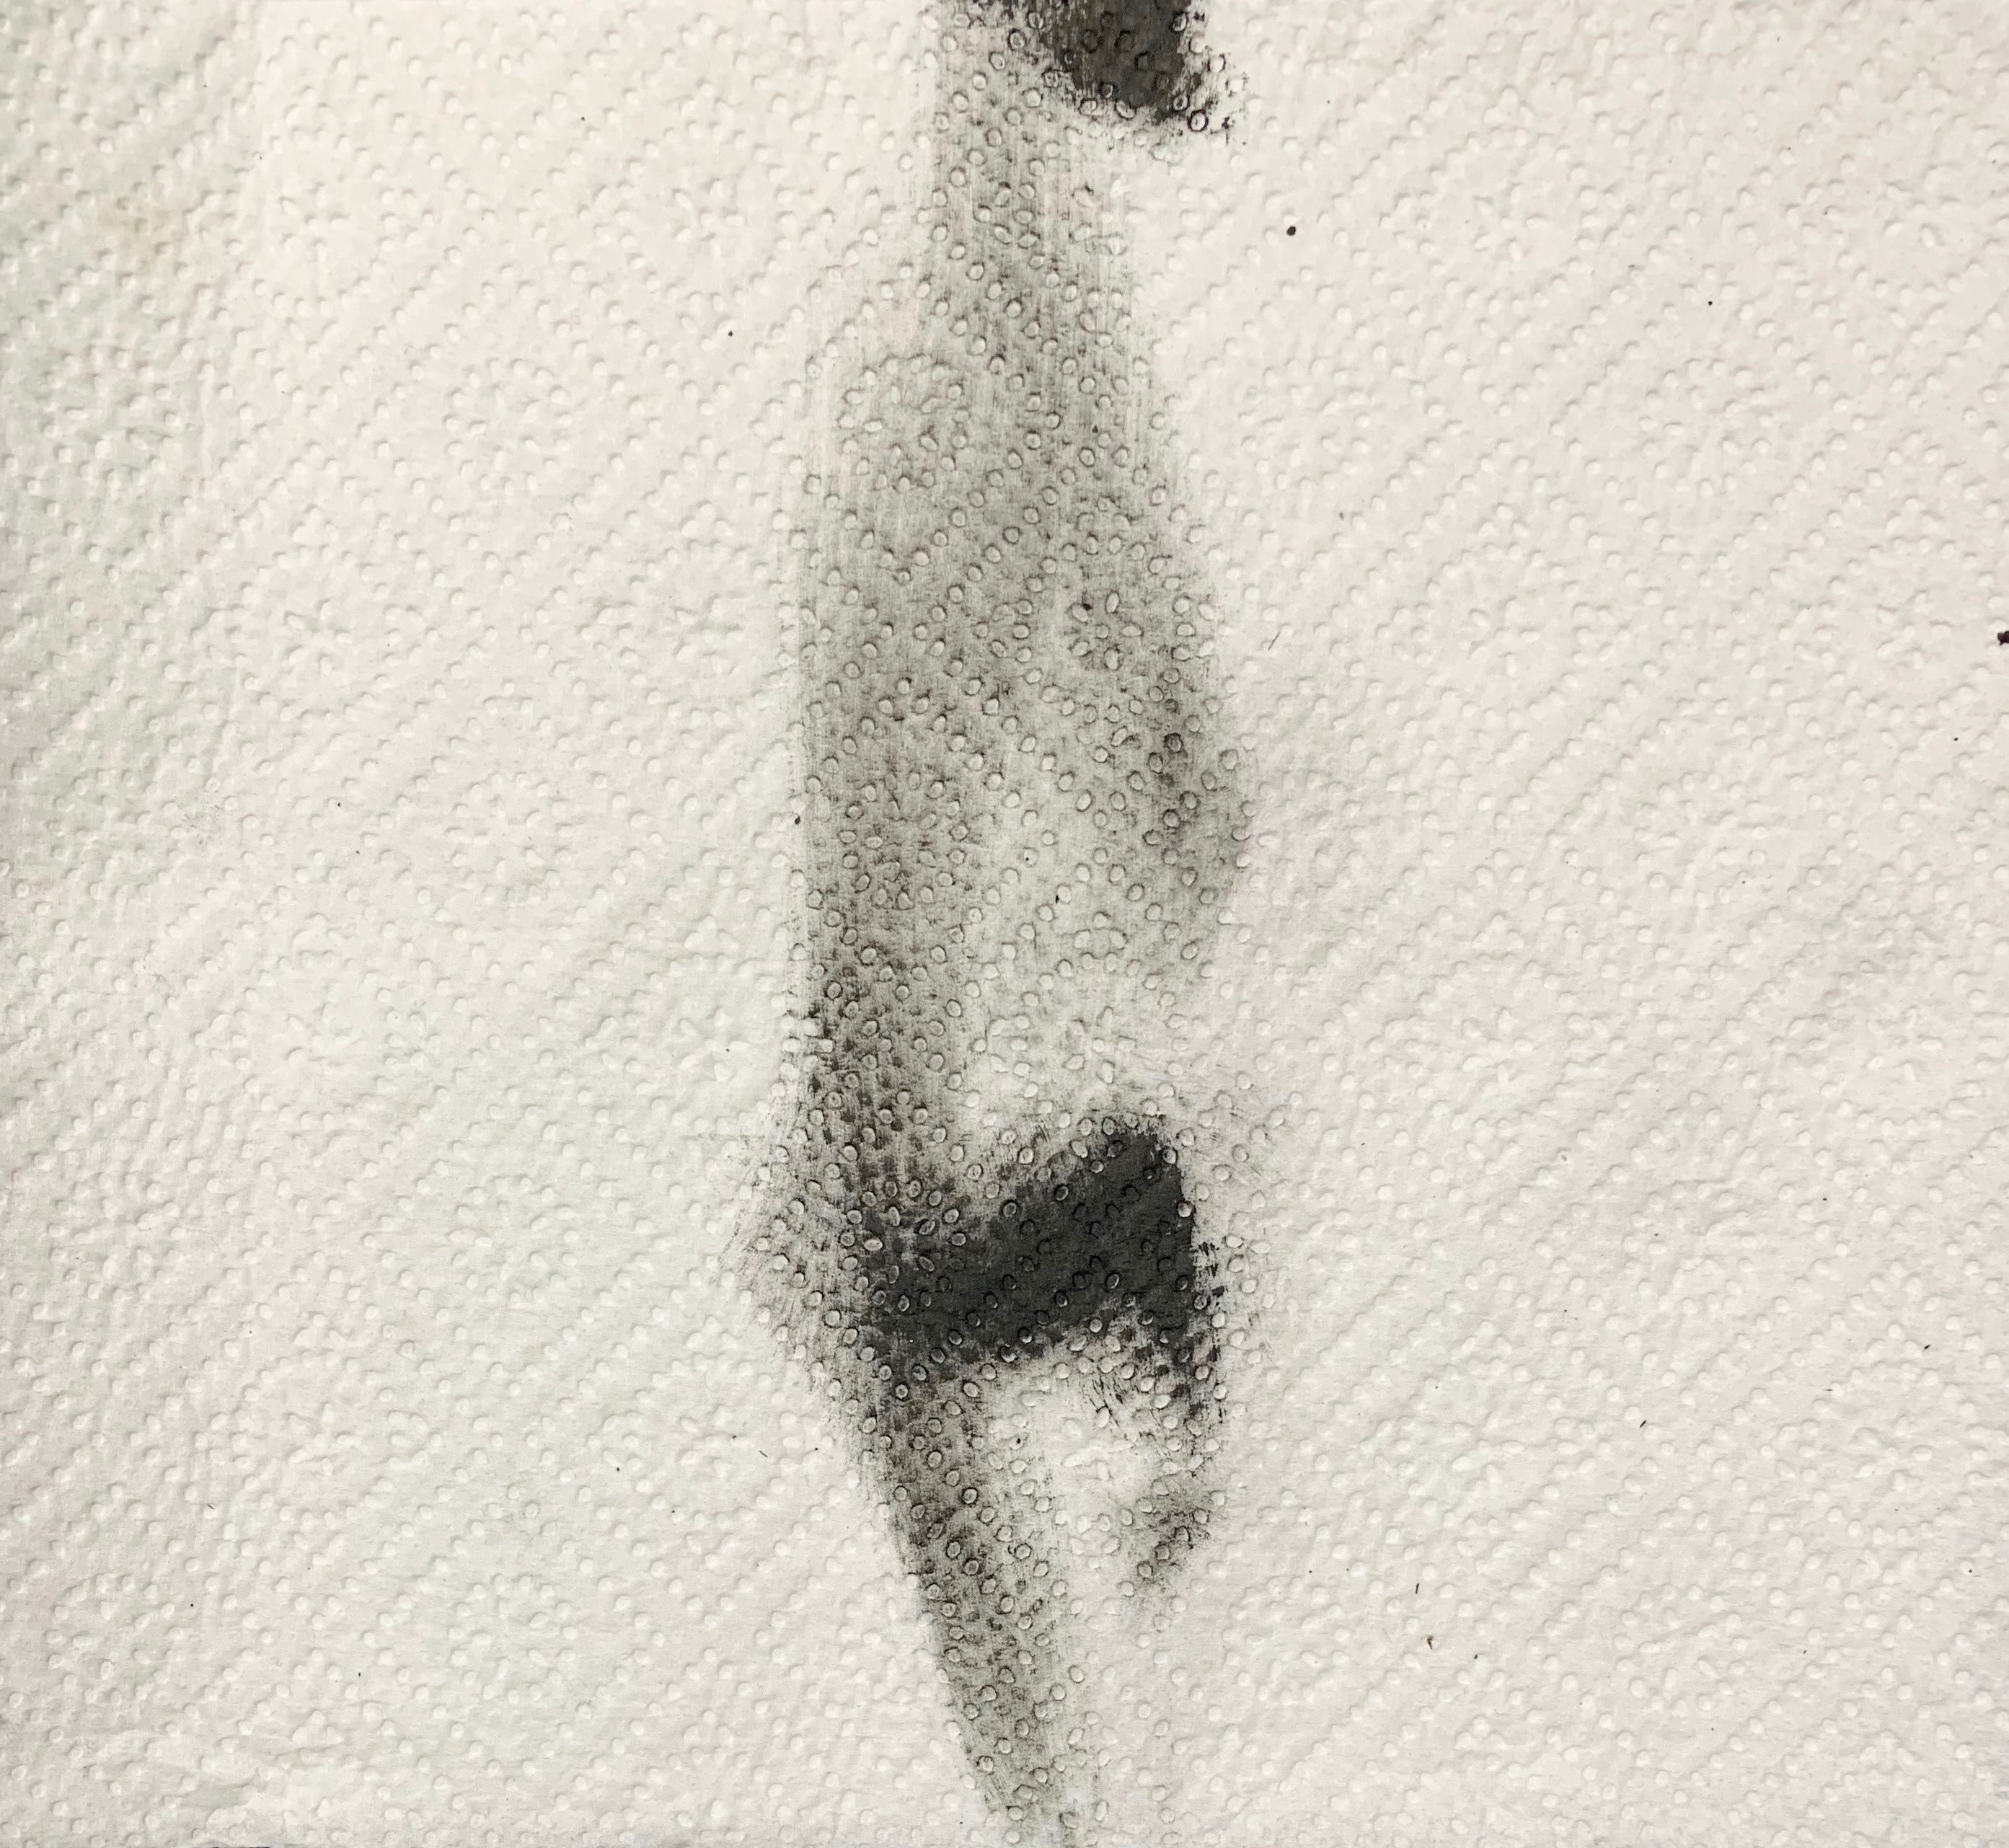 Rafal Bujnowski, Dirty Towel, 2019, oil on paper, 9 x 9 5/8 in. (22.86 x 24.45 cm), RB_FP4169